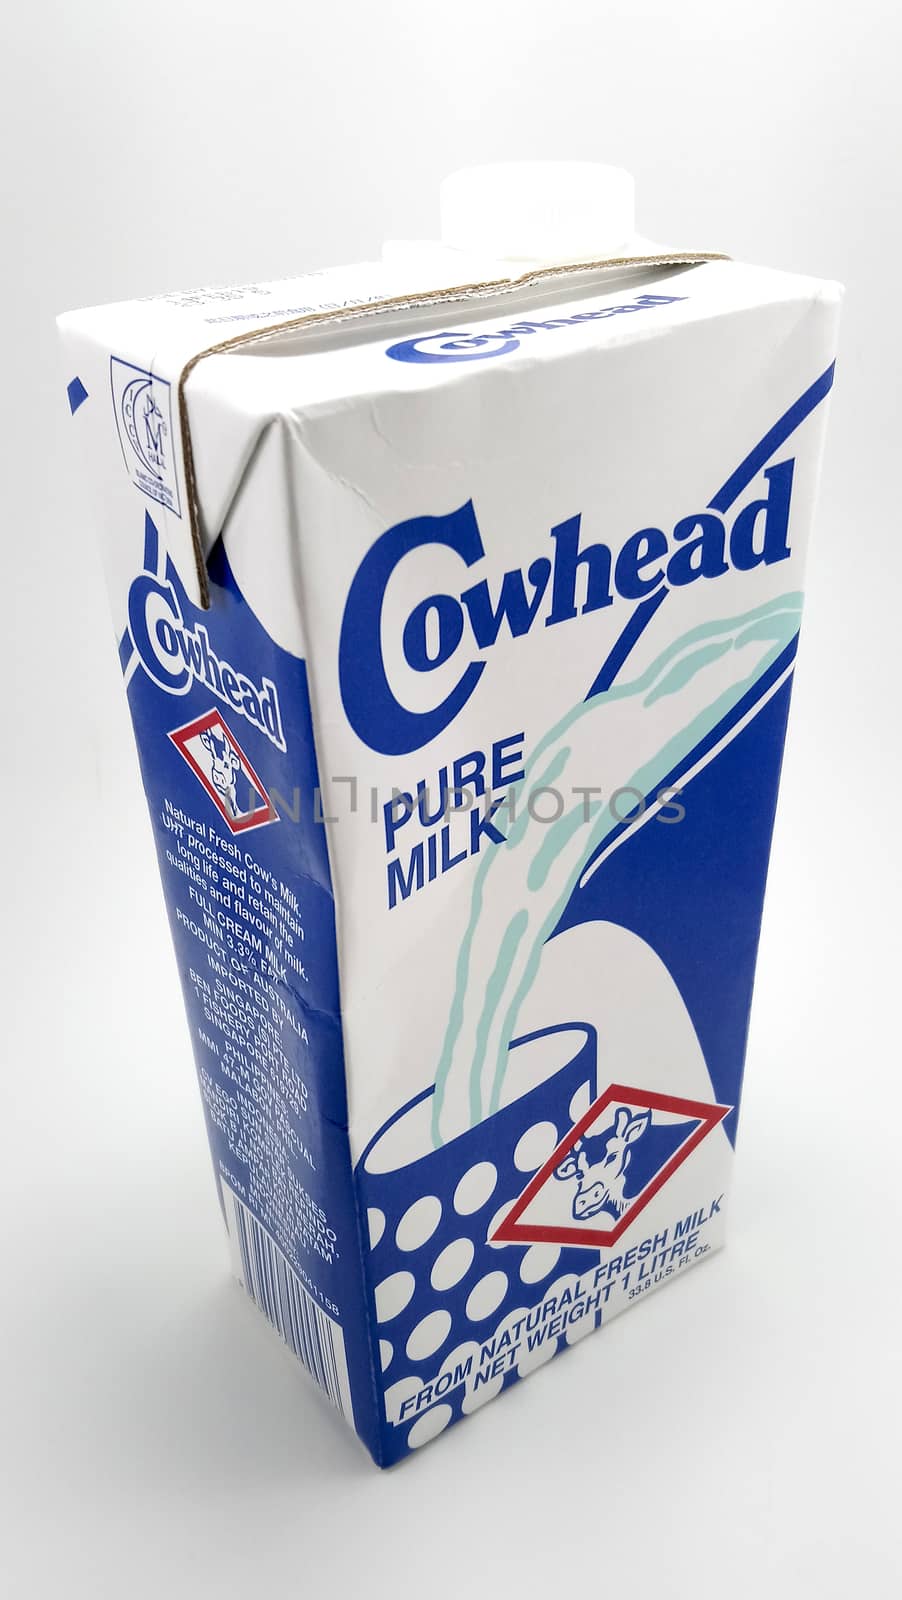 Cowhead pure milk in Manila, Philippines by imwaltersy